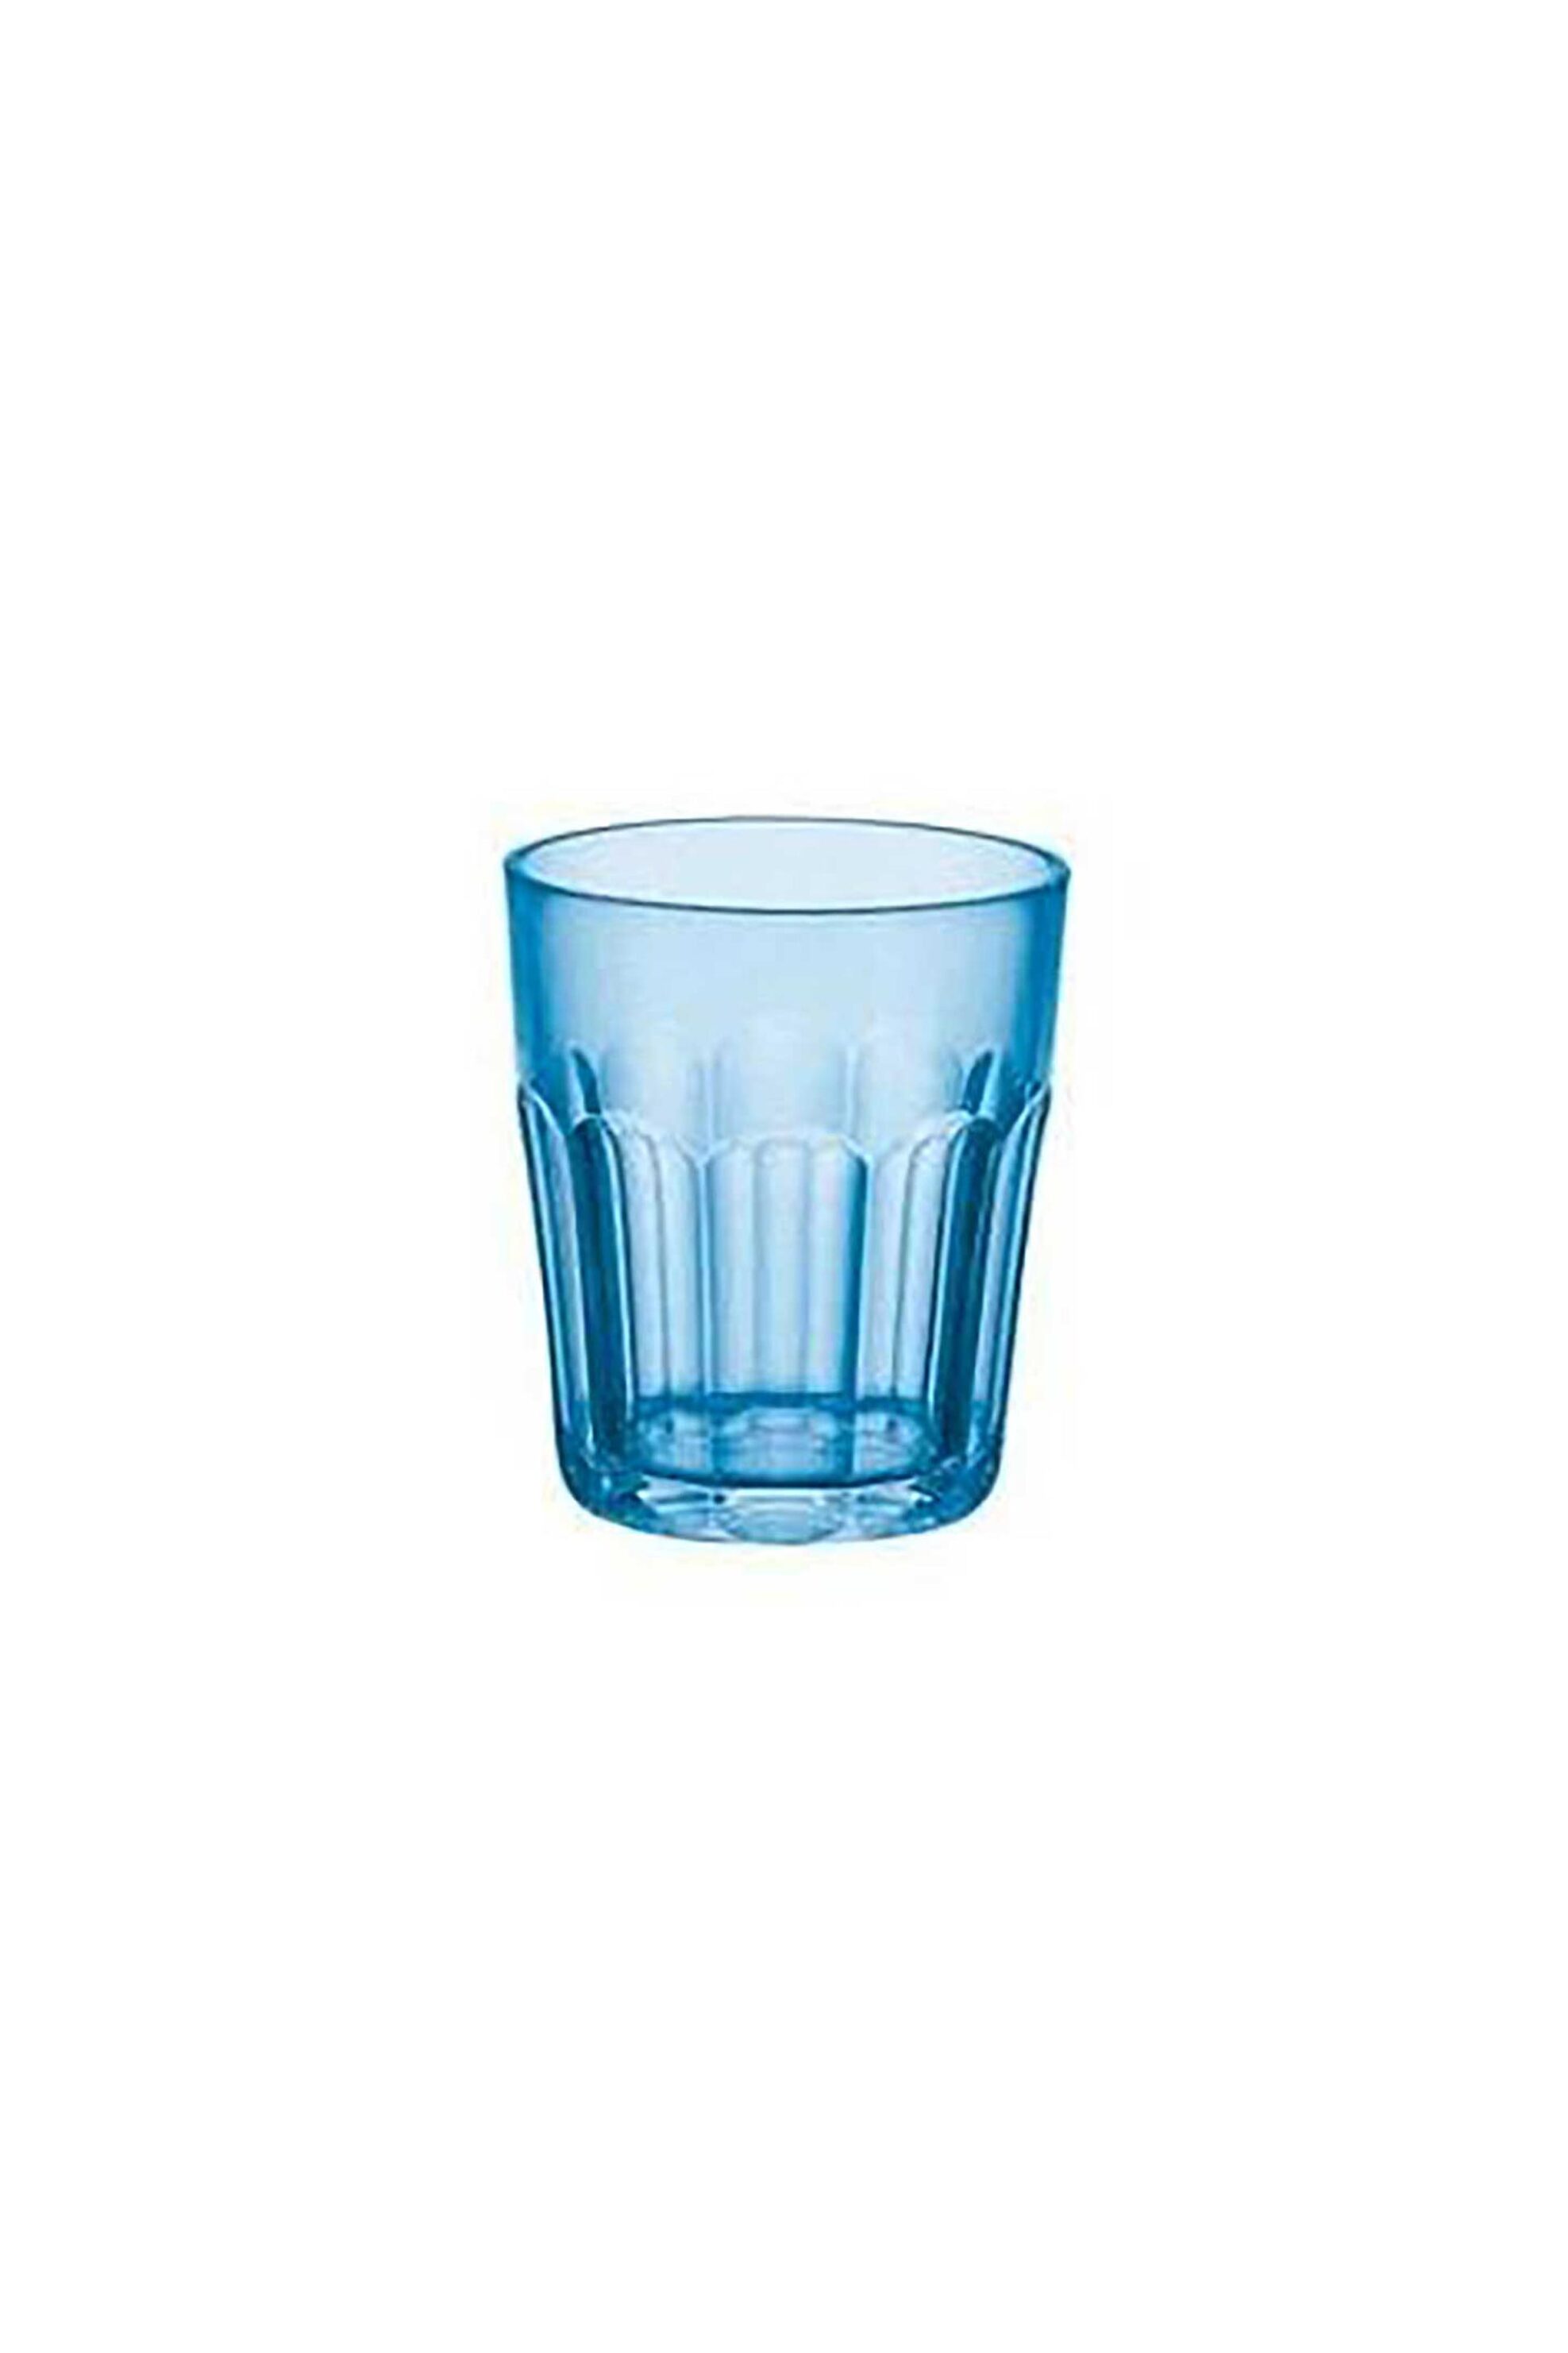 Home > ΚΟΥΖΙΝΑ > Υαλικά > Ποτήρια Guzzini γυάλινο ποτήρι χρωματιστό νερού "Happy Hour" 10 x 8 cm - 8008392231295